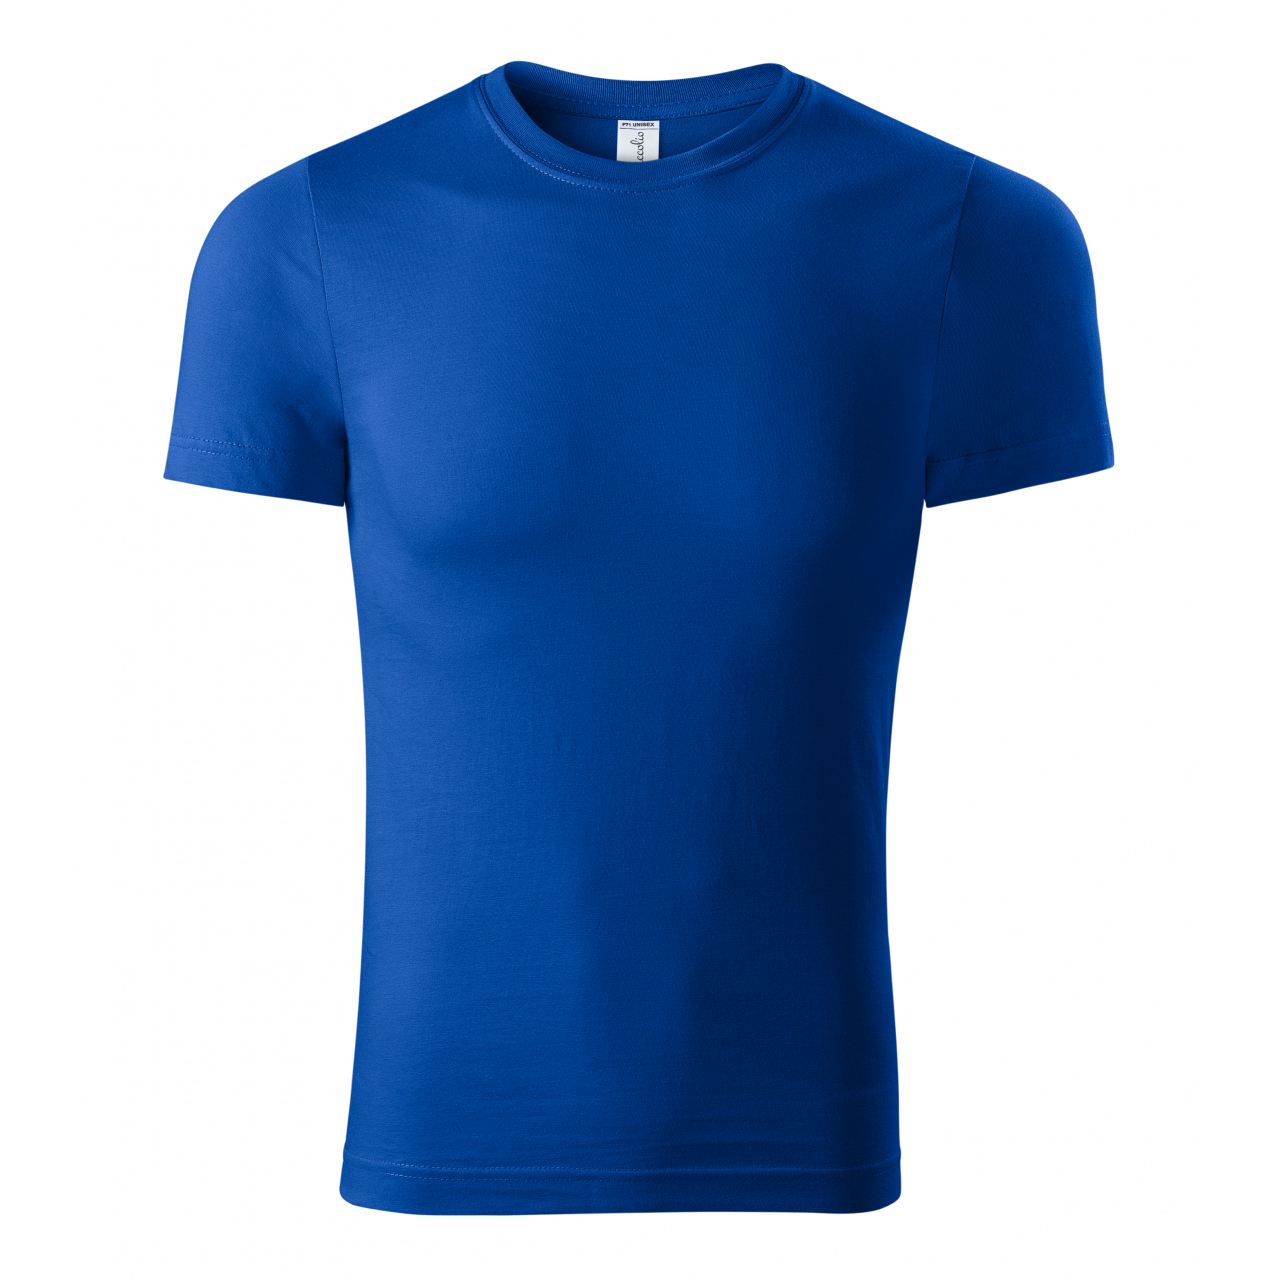 Tričko unisex Piccolio Parade - modré, XL